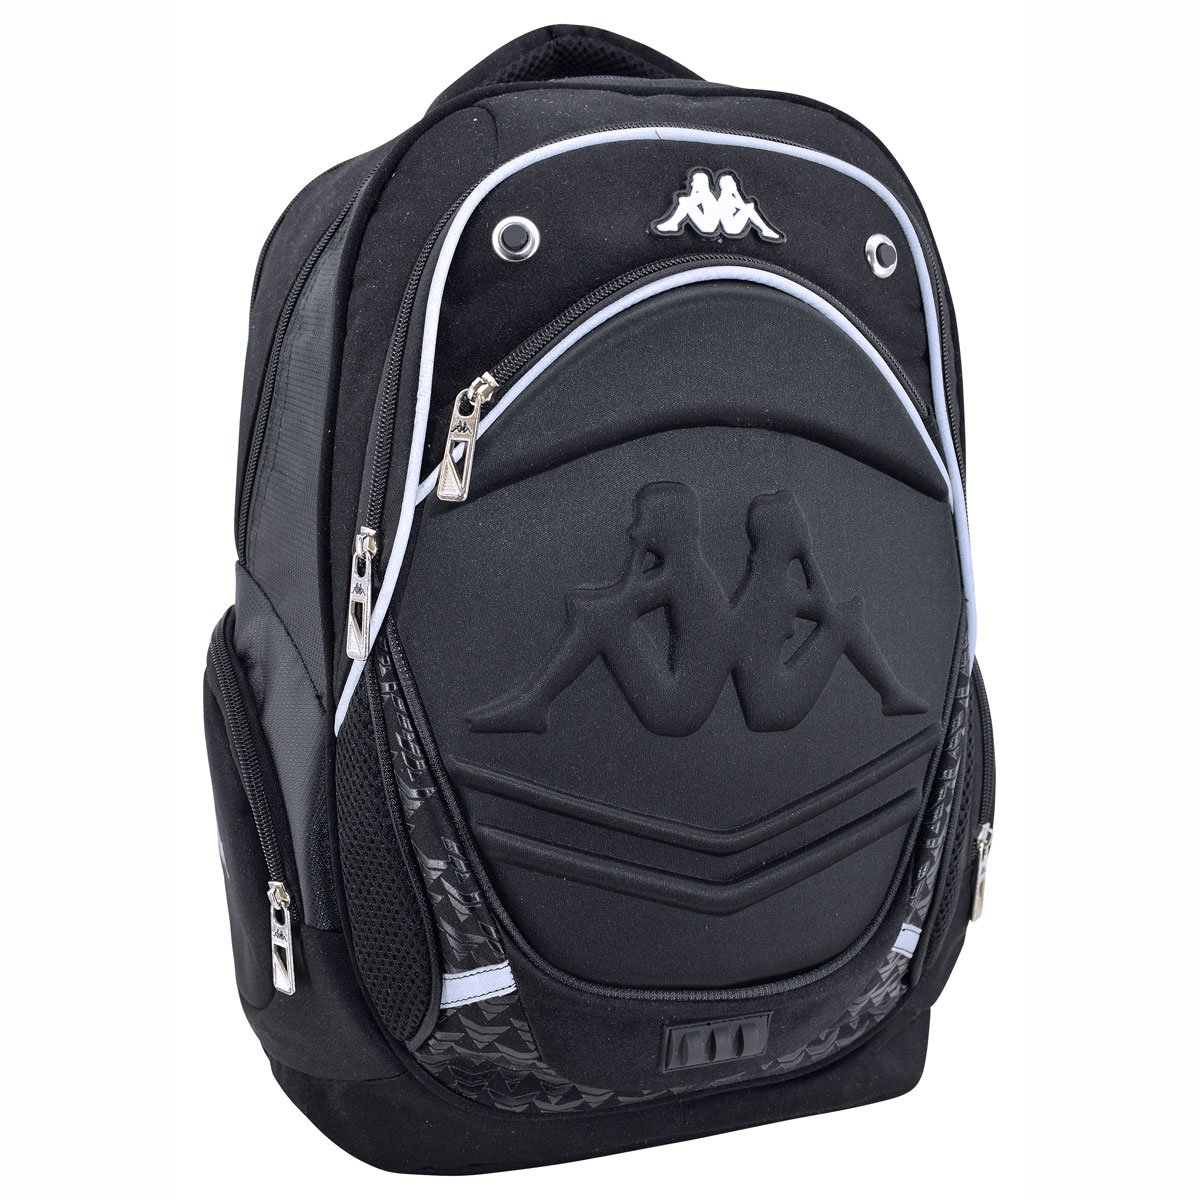 Mochila Tipo Backpack Kpx-00004 Kappa